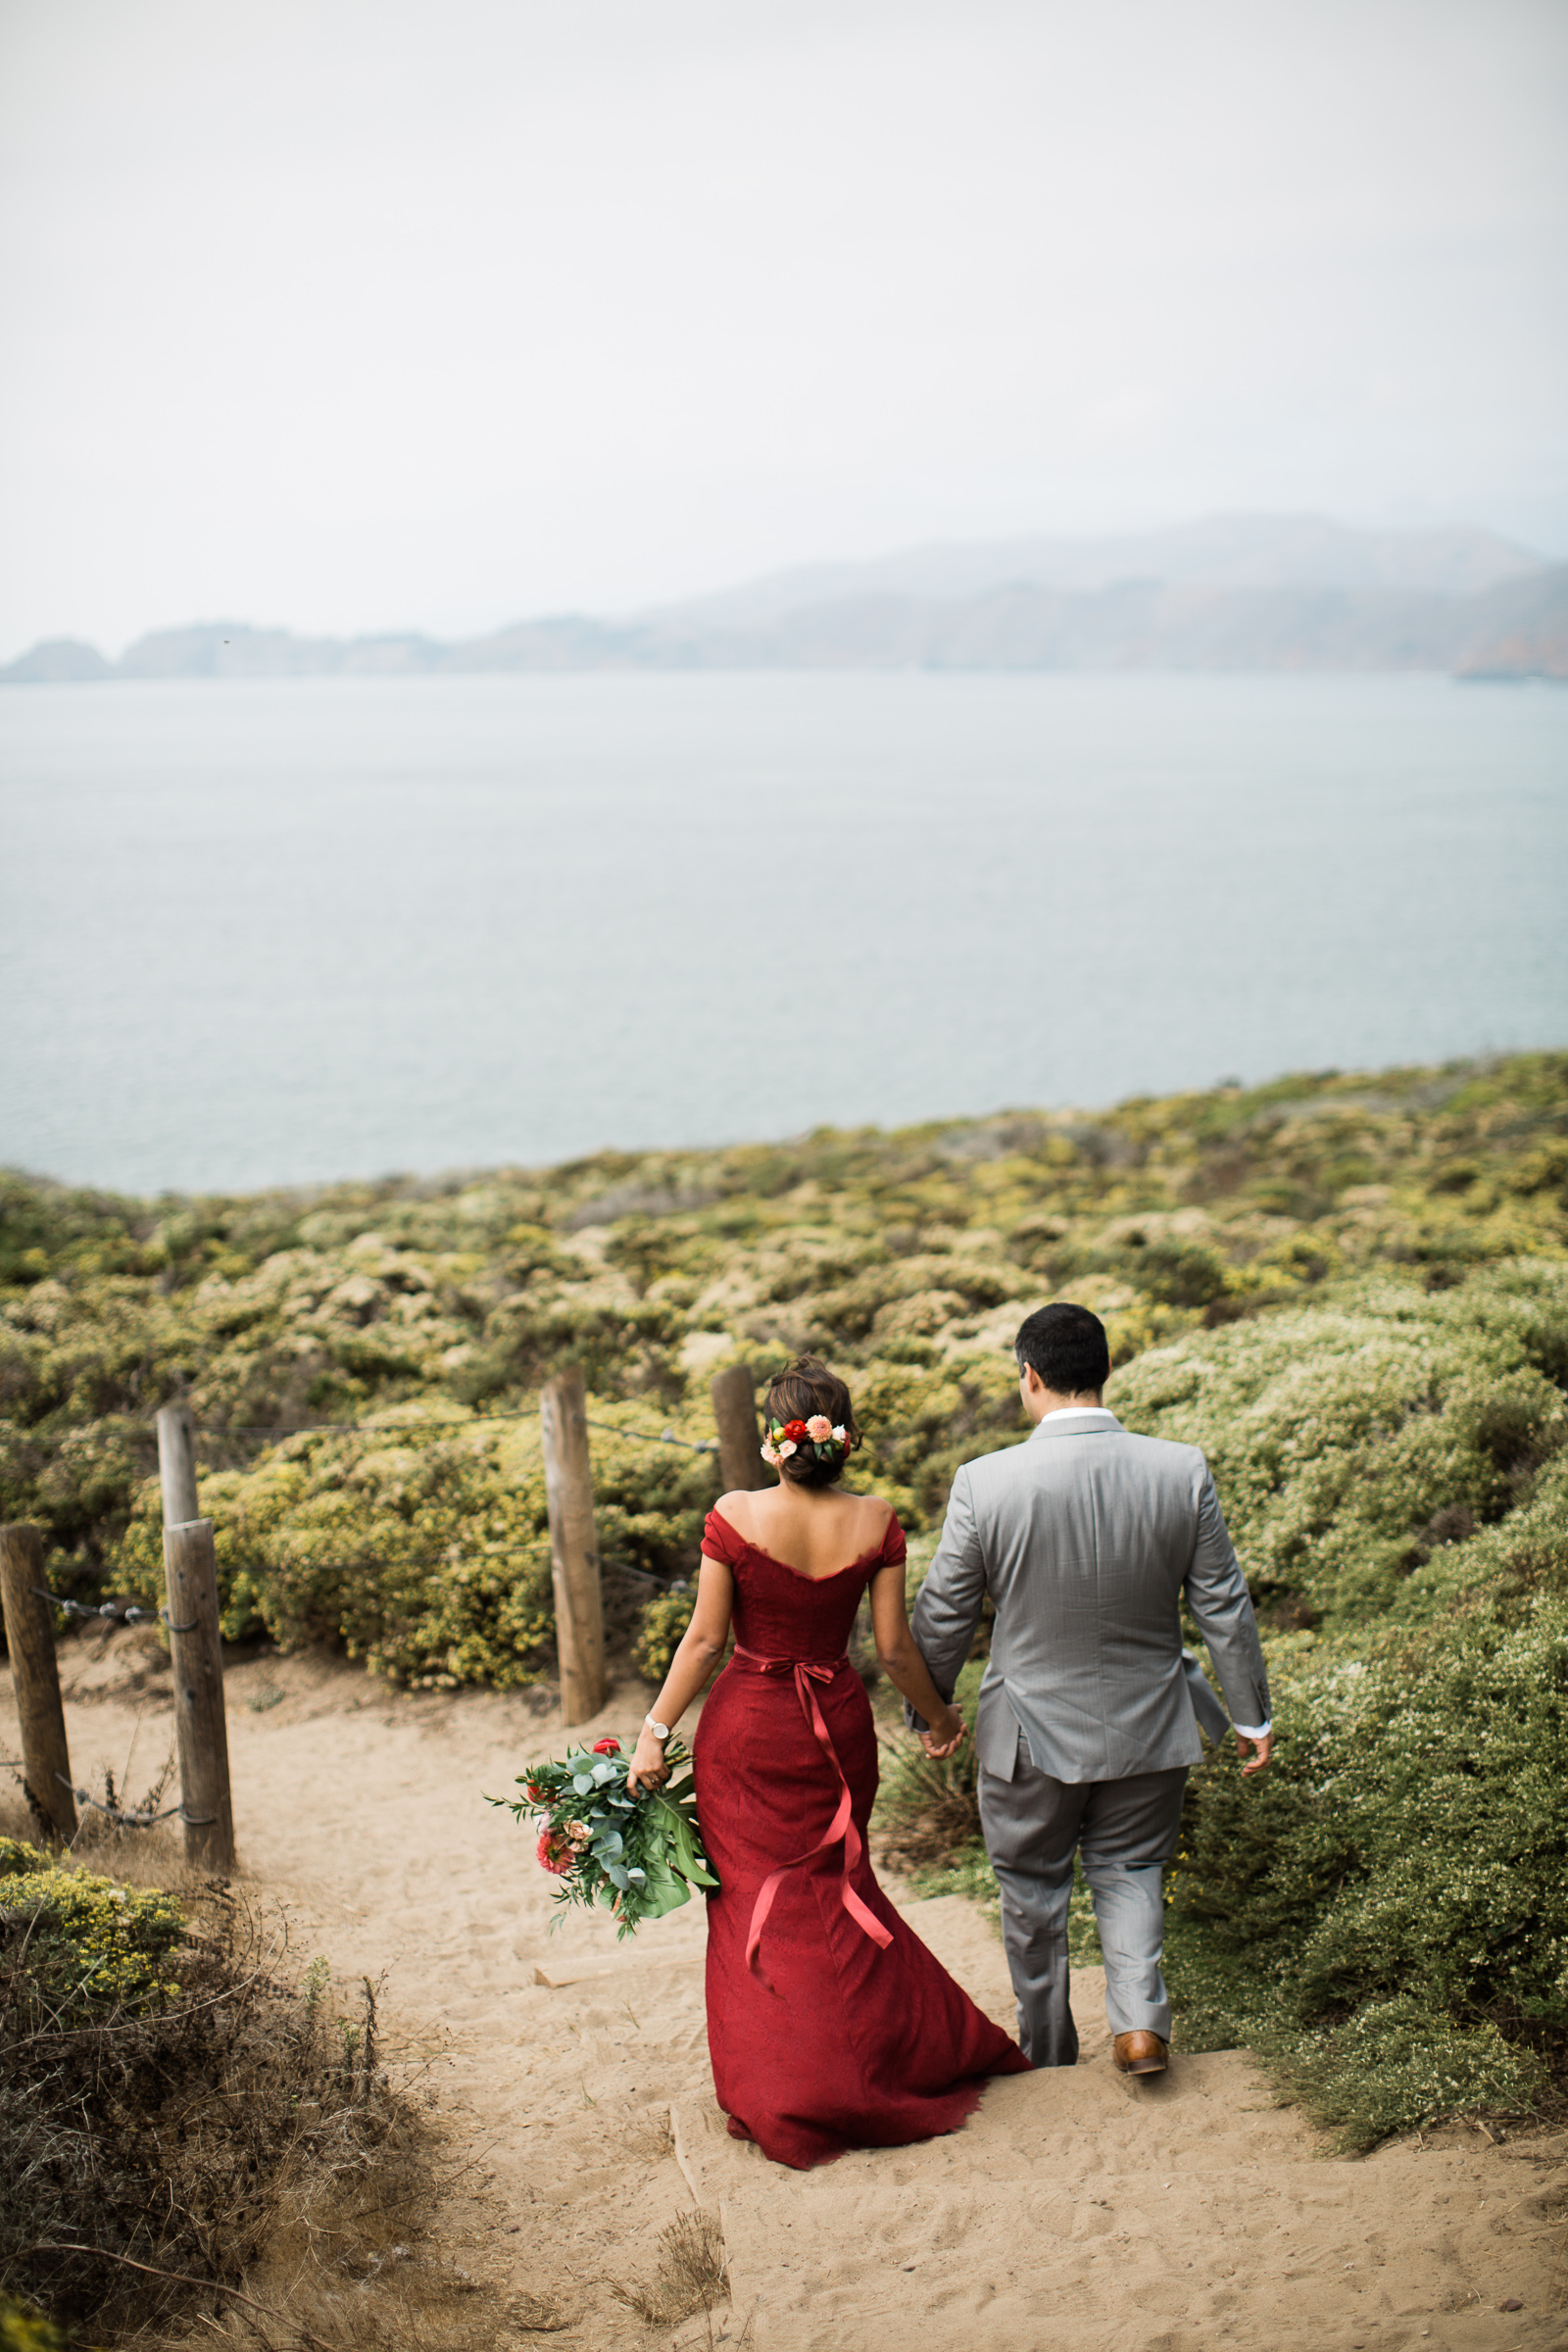 A wedding couple walks down a path towards the ocean in a Manali Anne photo